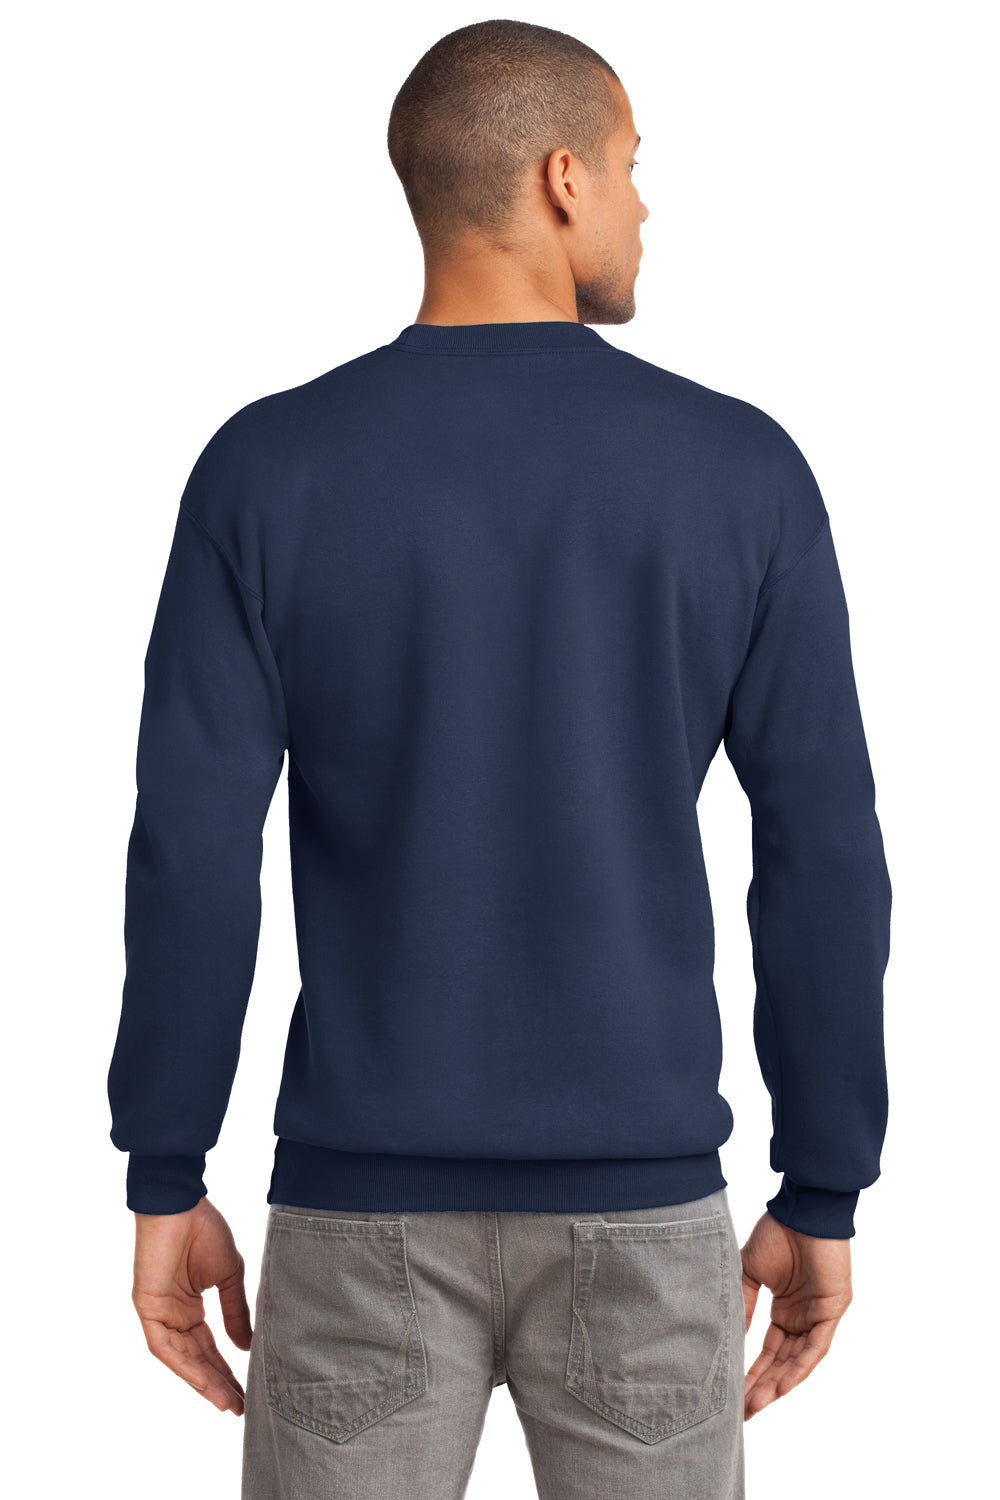 Port & Company PC90 Mens Essential Fleece Crewneck Sweatshirt Navy Blue Back